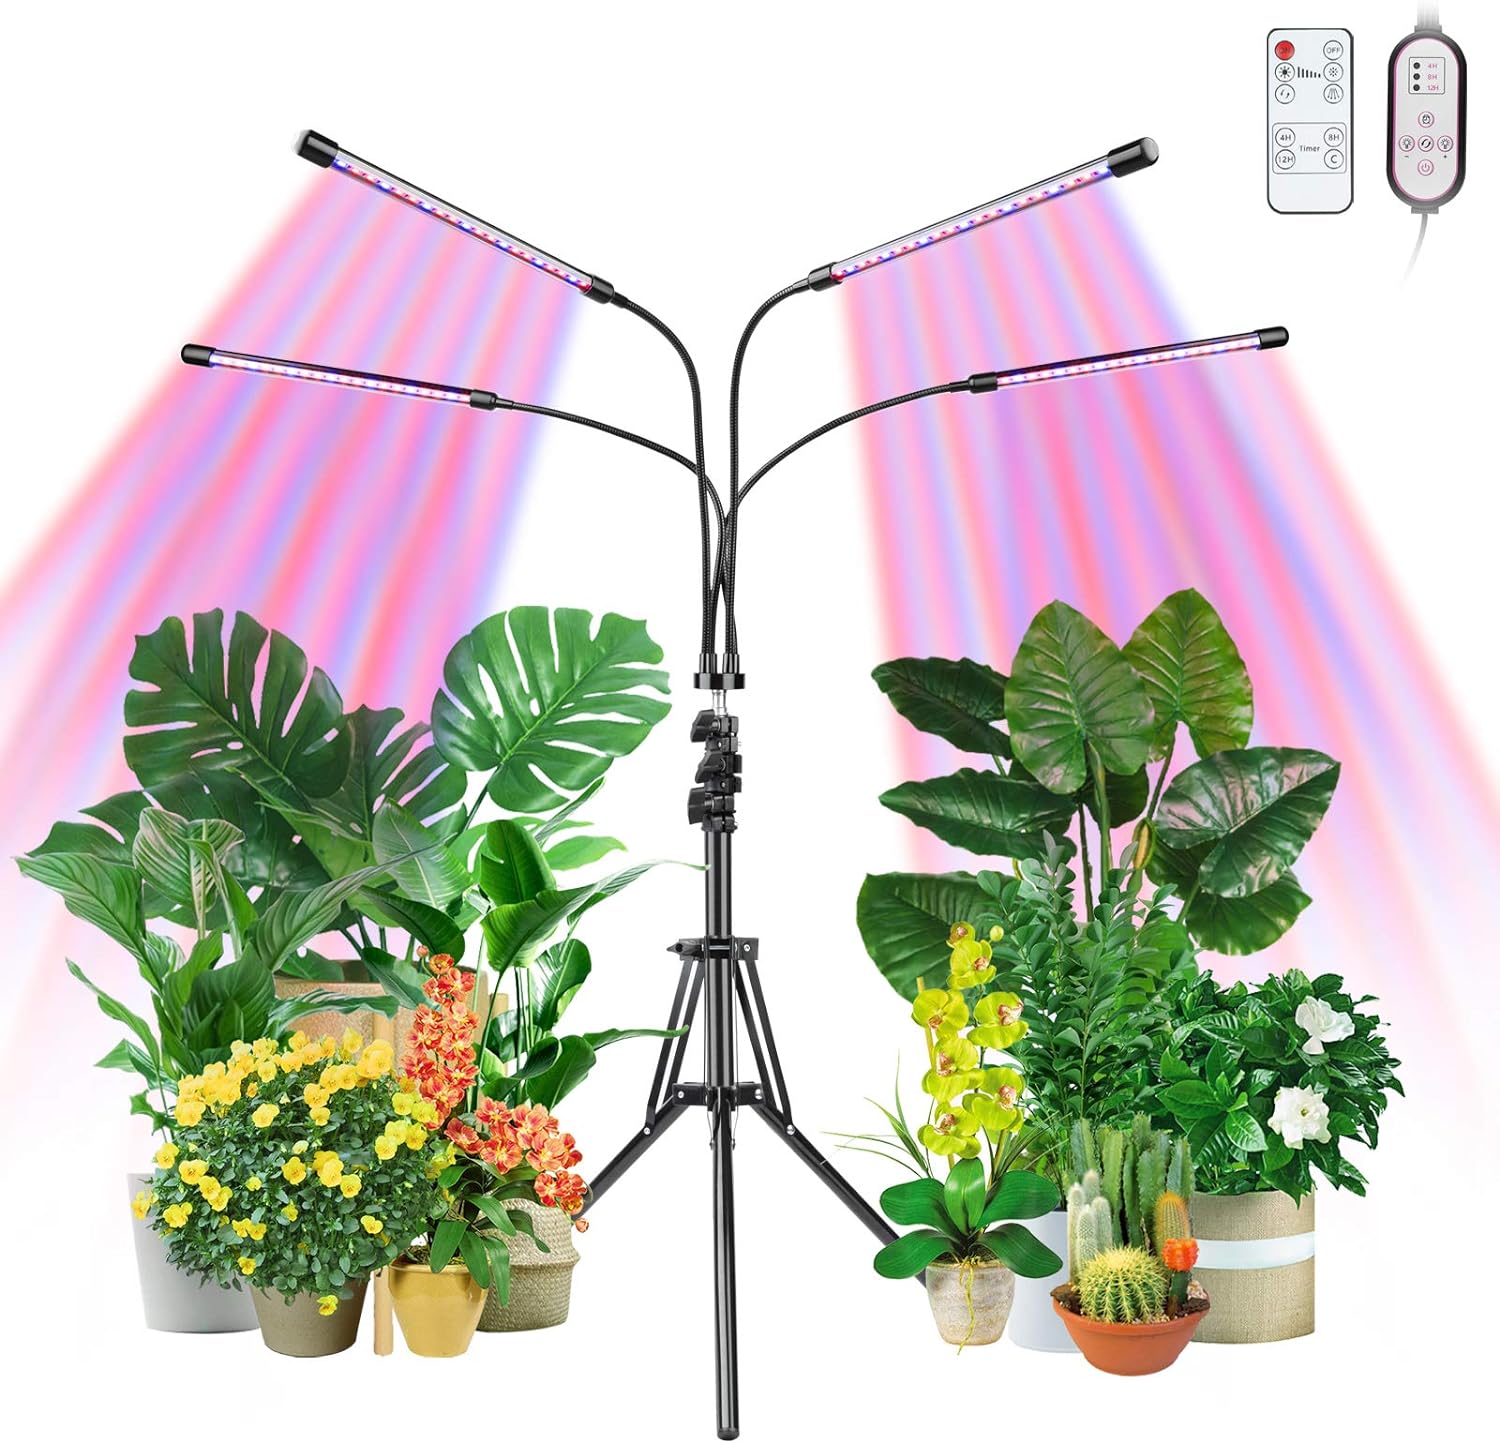 LM LED植物成長ライト 植物栽培ライト 自動スイッチタイミング機能（4H / 8H / 12H)屋内栽培ライト 10階調光および360°調整可能な3つの照明パターン植物ライト 2つの調整モード 日光不足を解消栽培ランプ、ジューシーな植物栽培ハイドロポニック用